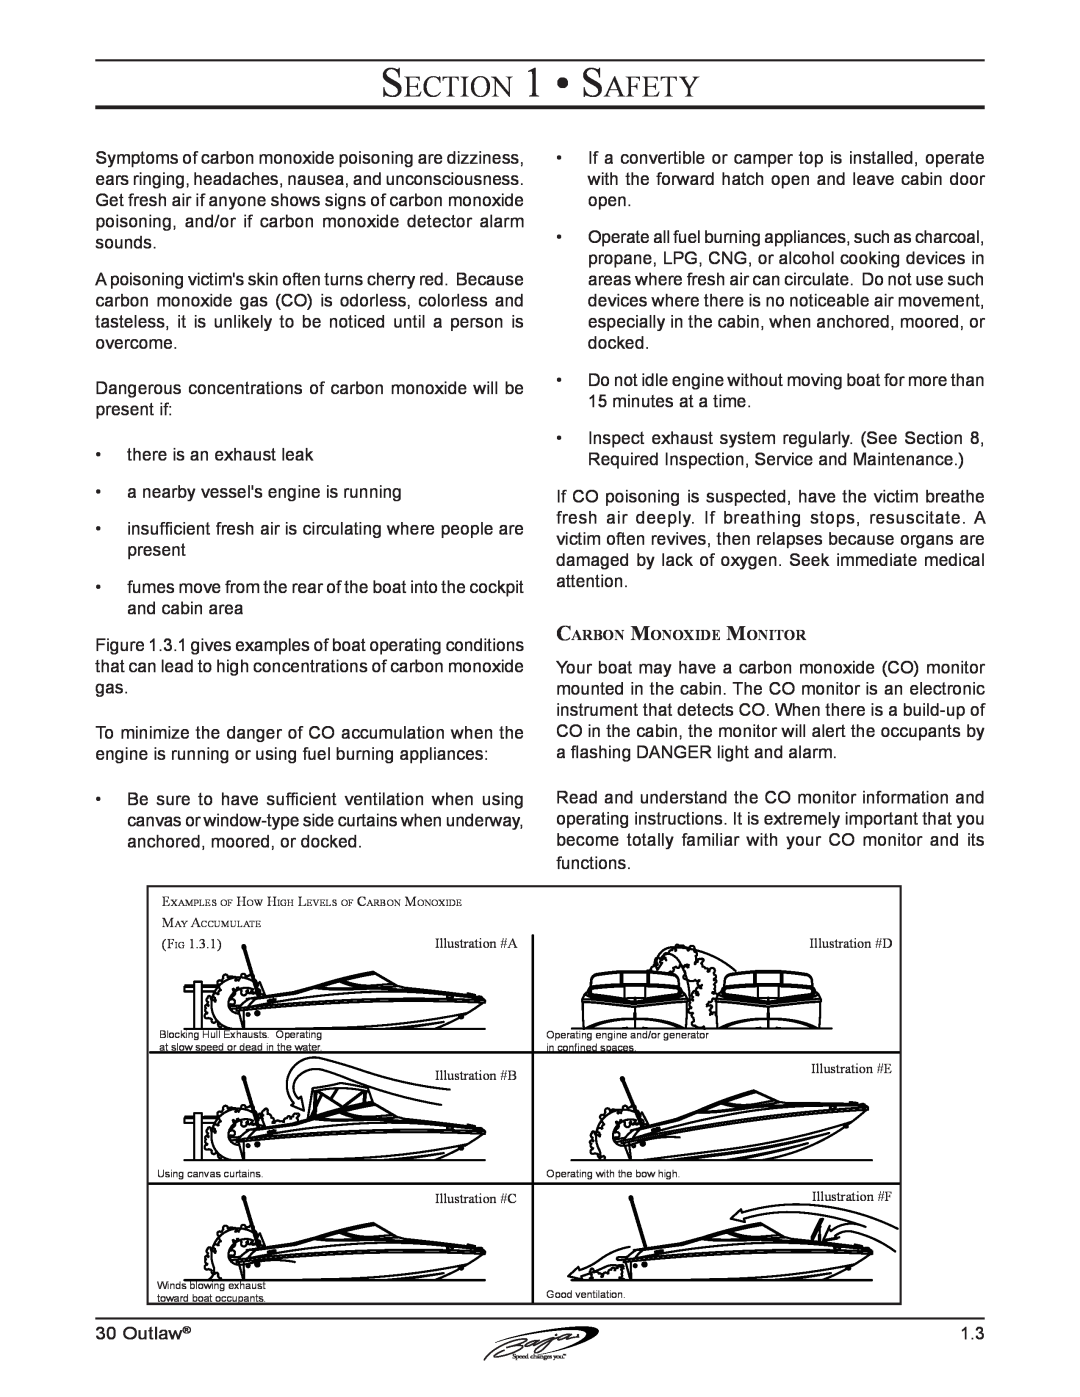 Baja Marine 30 manual Safety, Carbon Monoxide Monitor, F ig, Illustration #A, Illustration #B, Illustration #C 